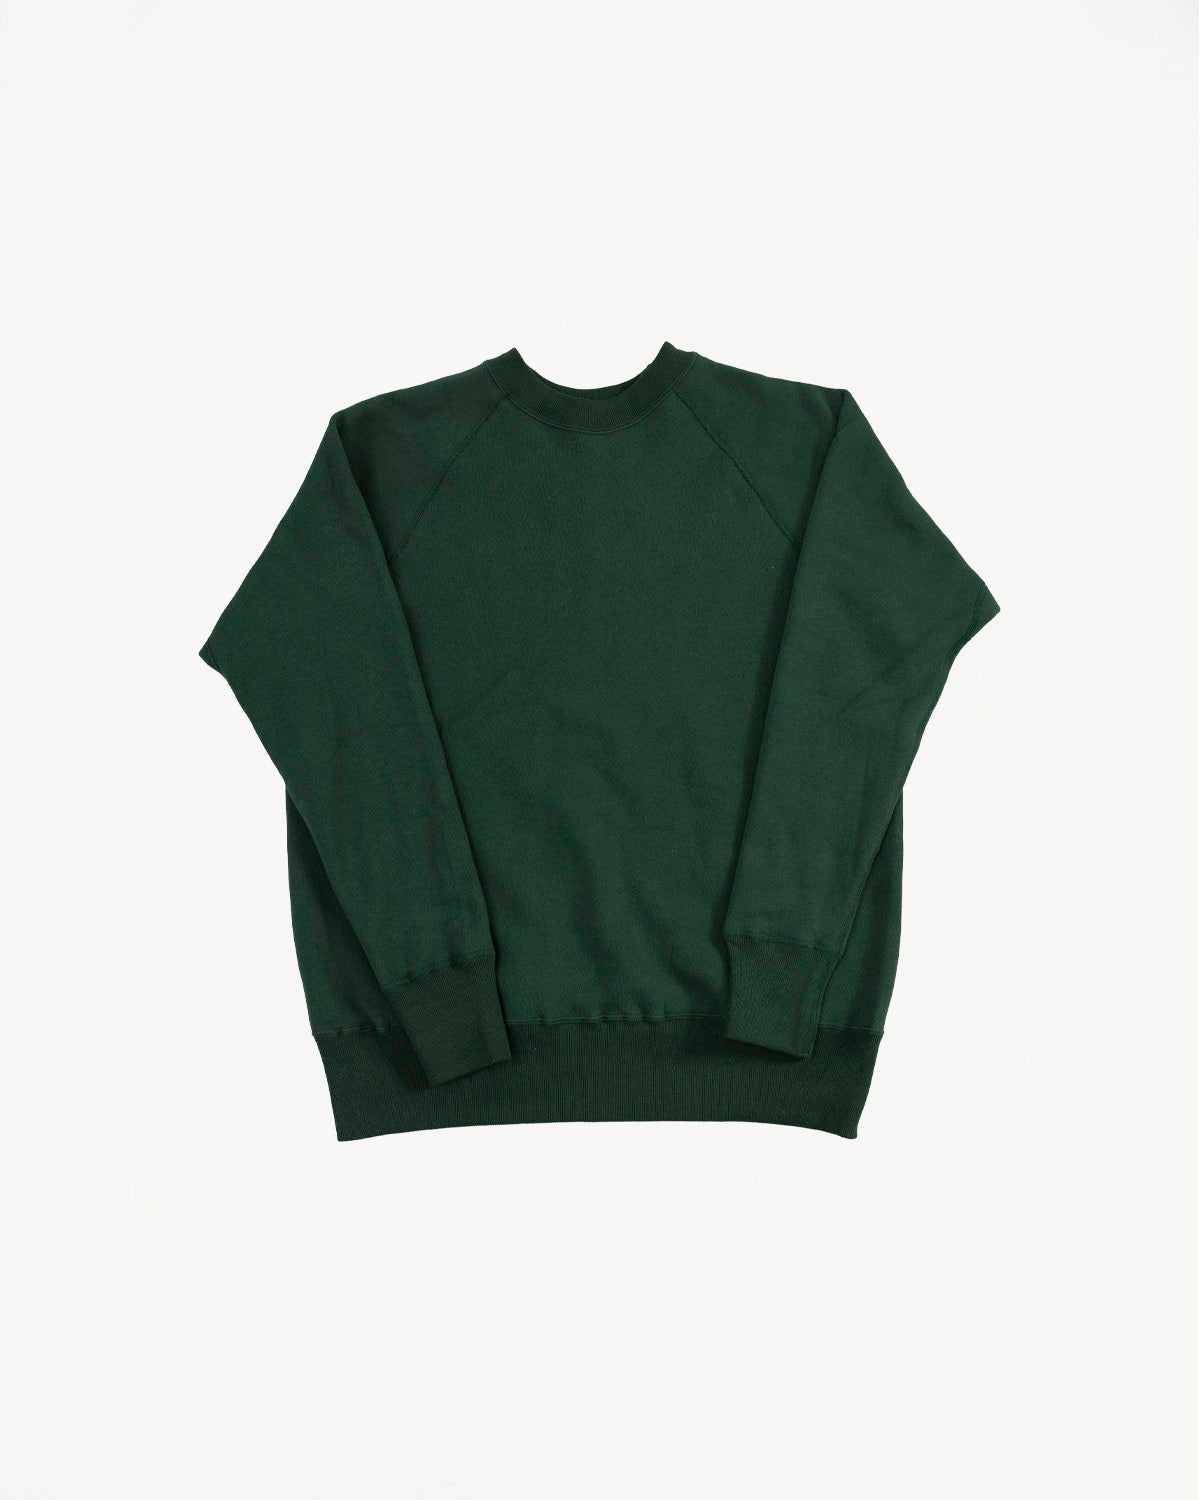 Lot 409 - Plain Crewneck Sweatshirt - Green